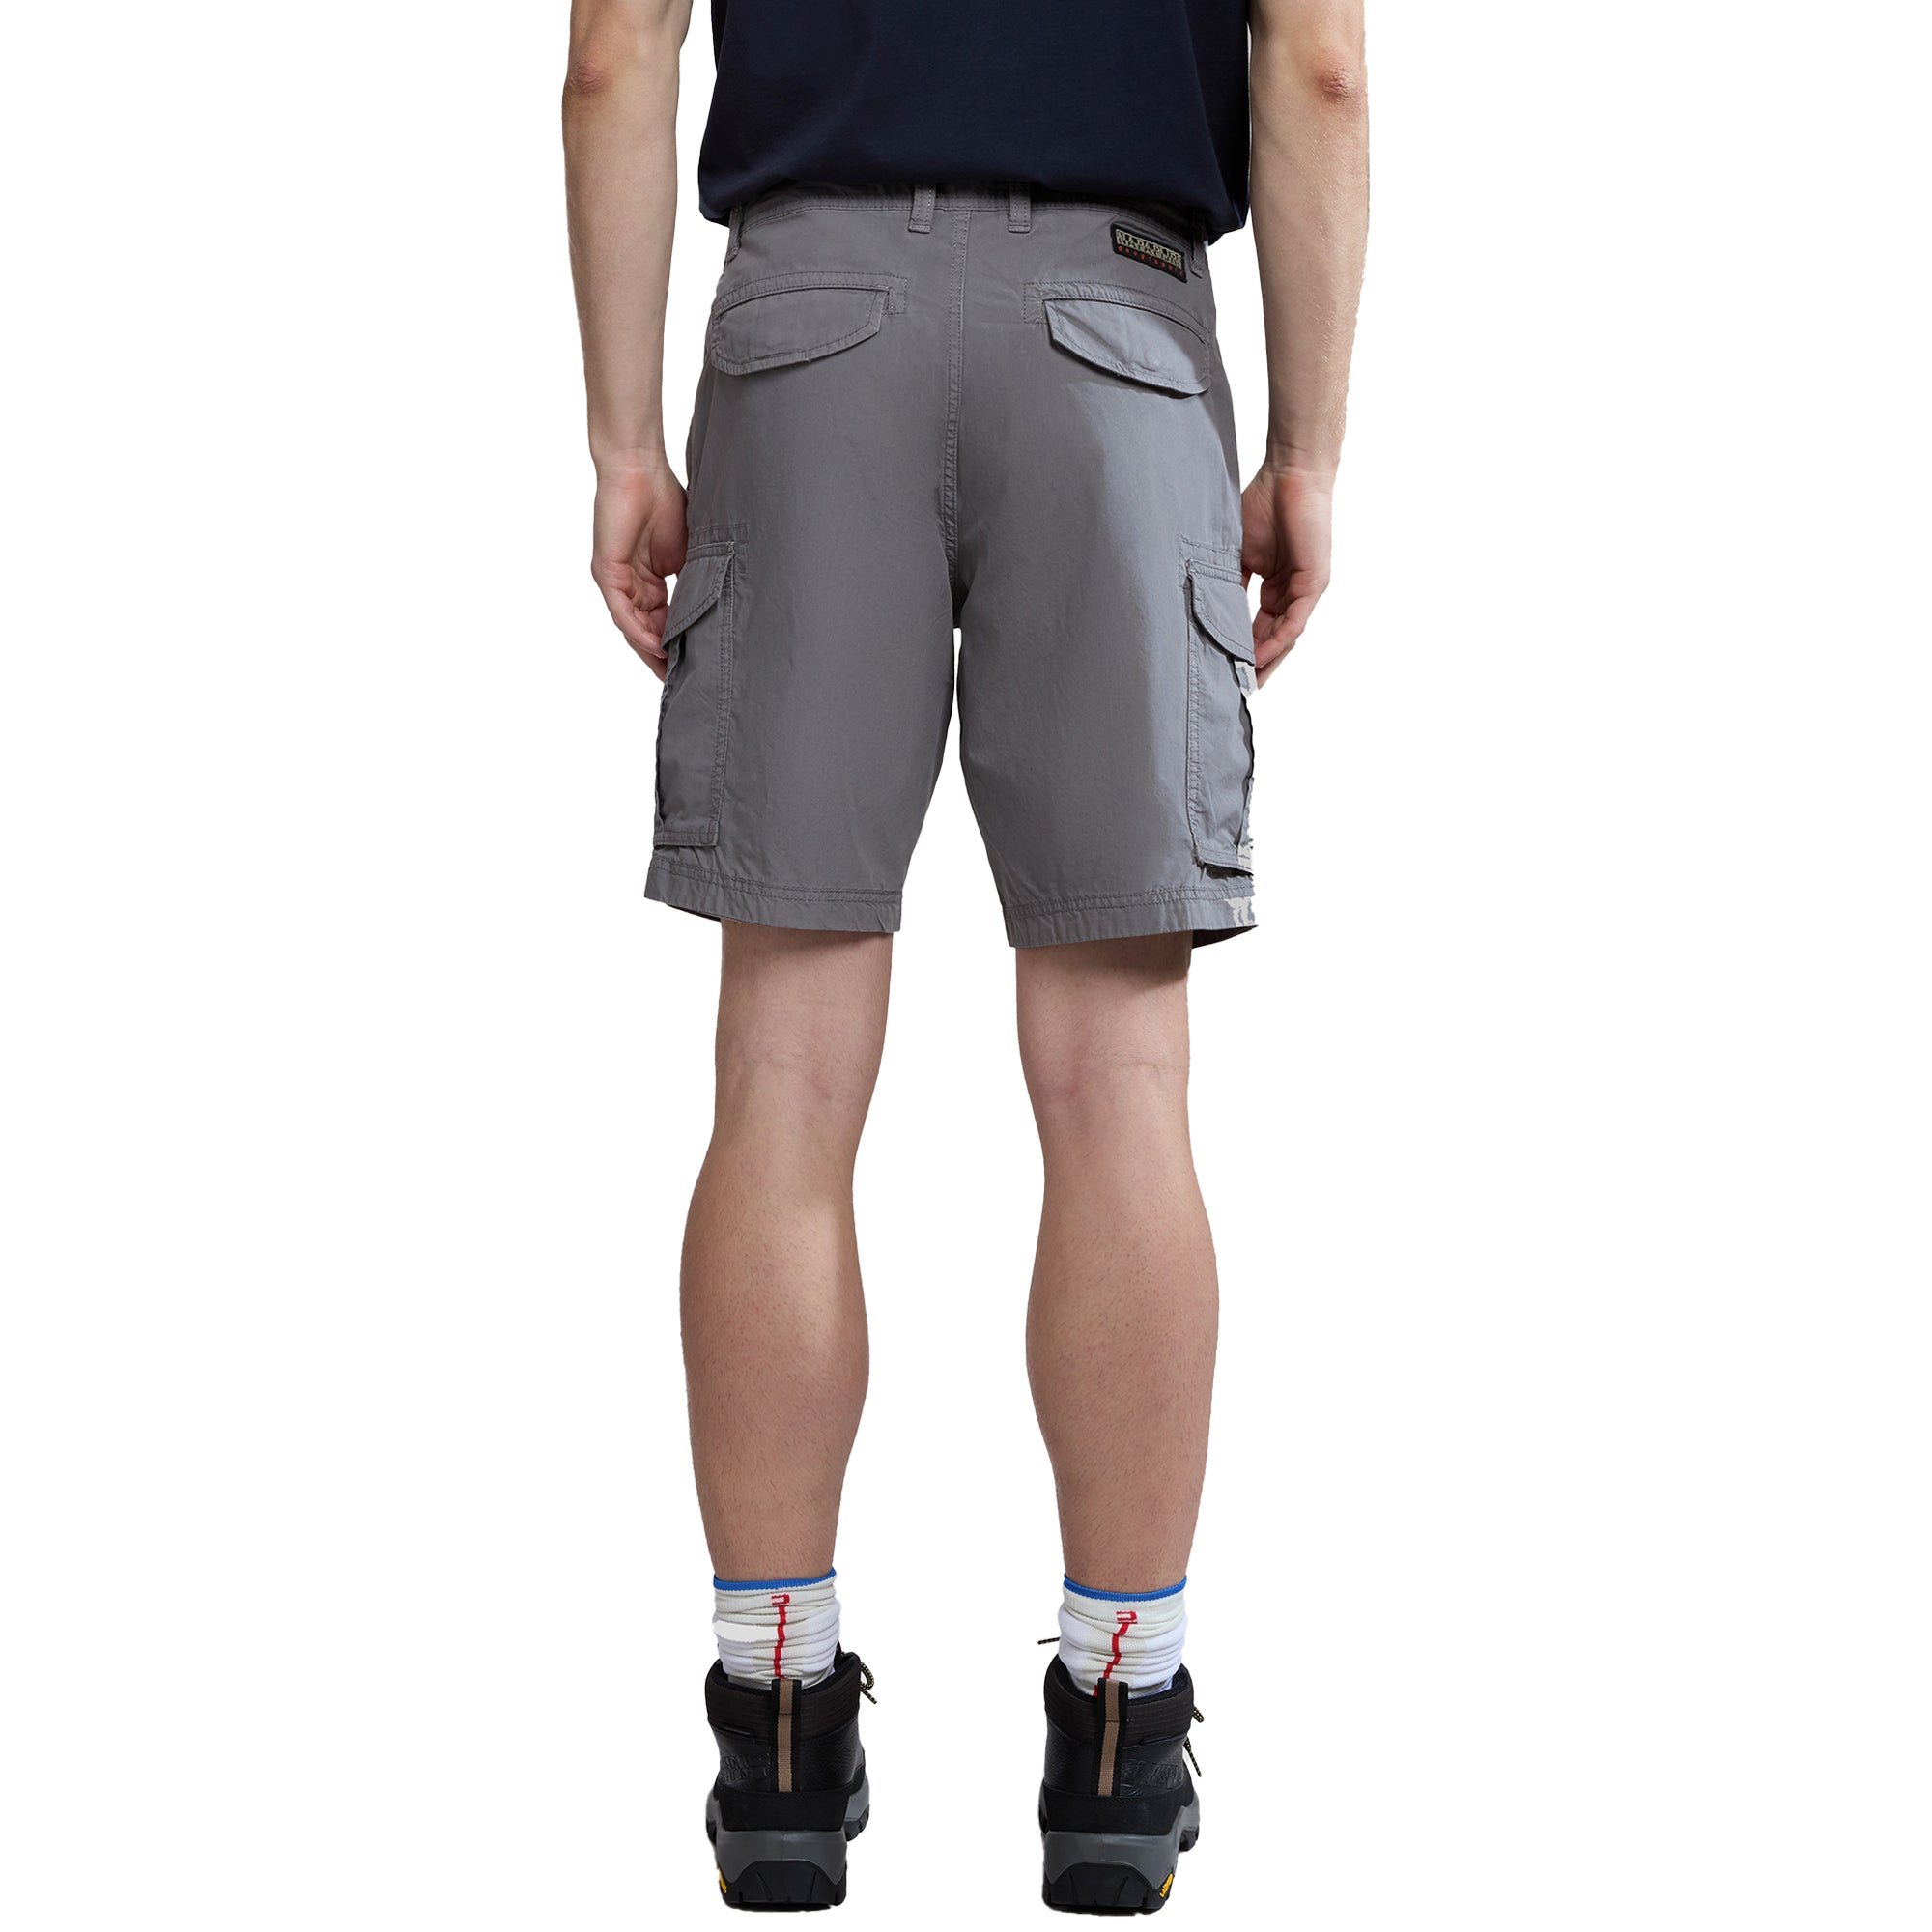 Napapijri Noto Cargo Shorts 2.0 - Grey Granite